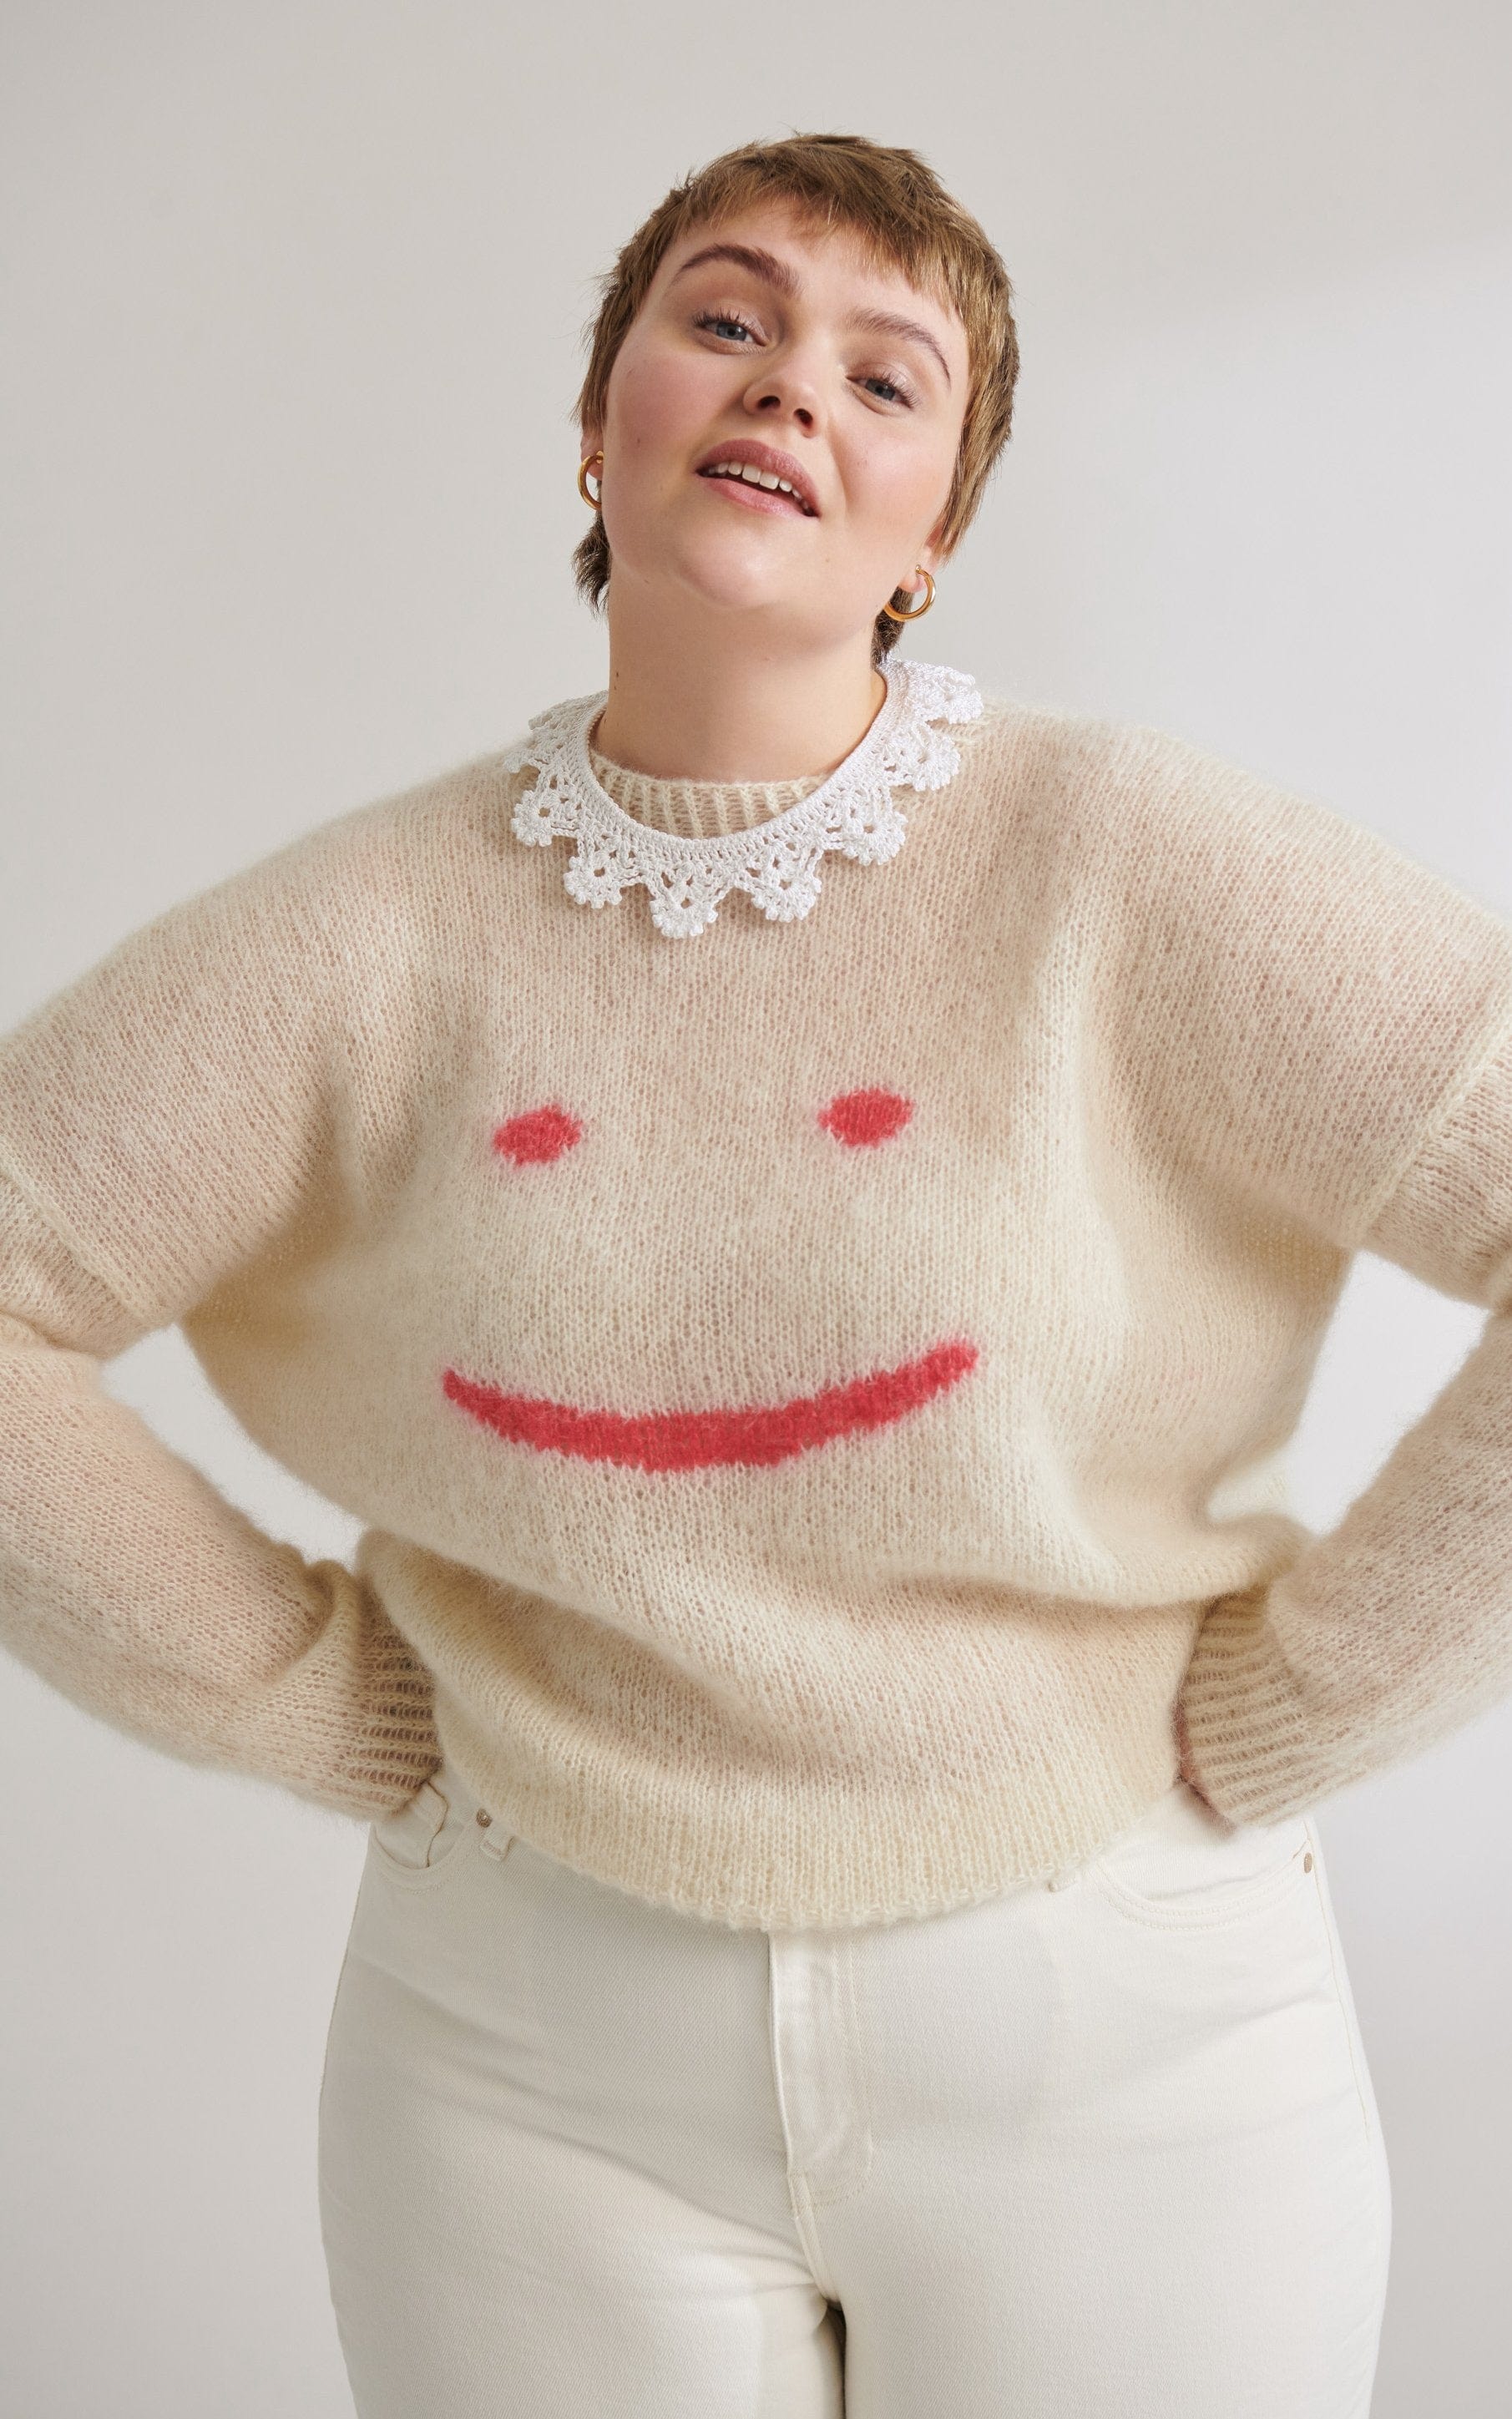 LANA GROSSA Strickset Pullover mit Smiley - Plus Size - SILKHAIR - Strickset